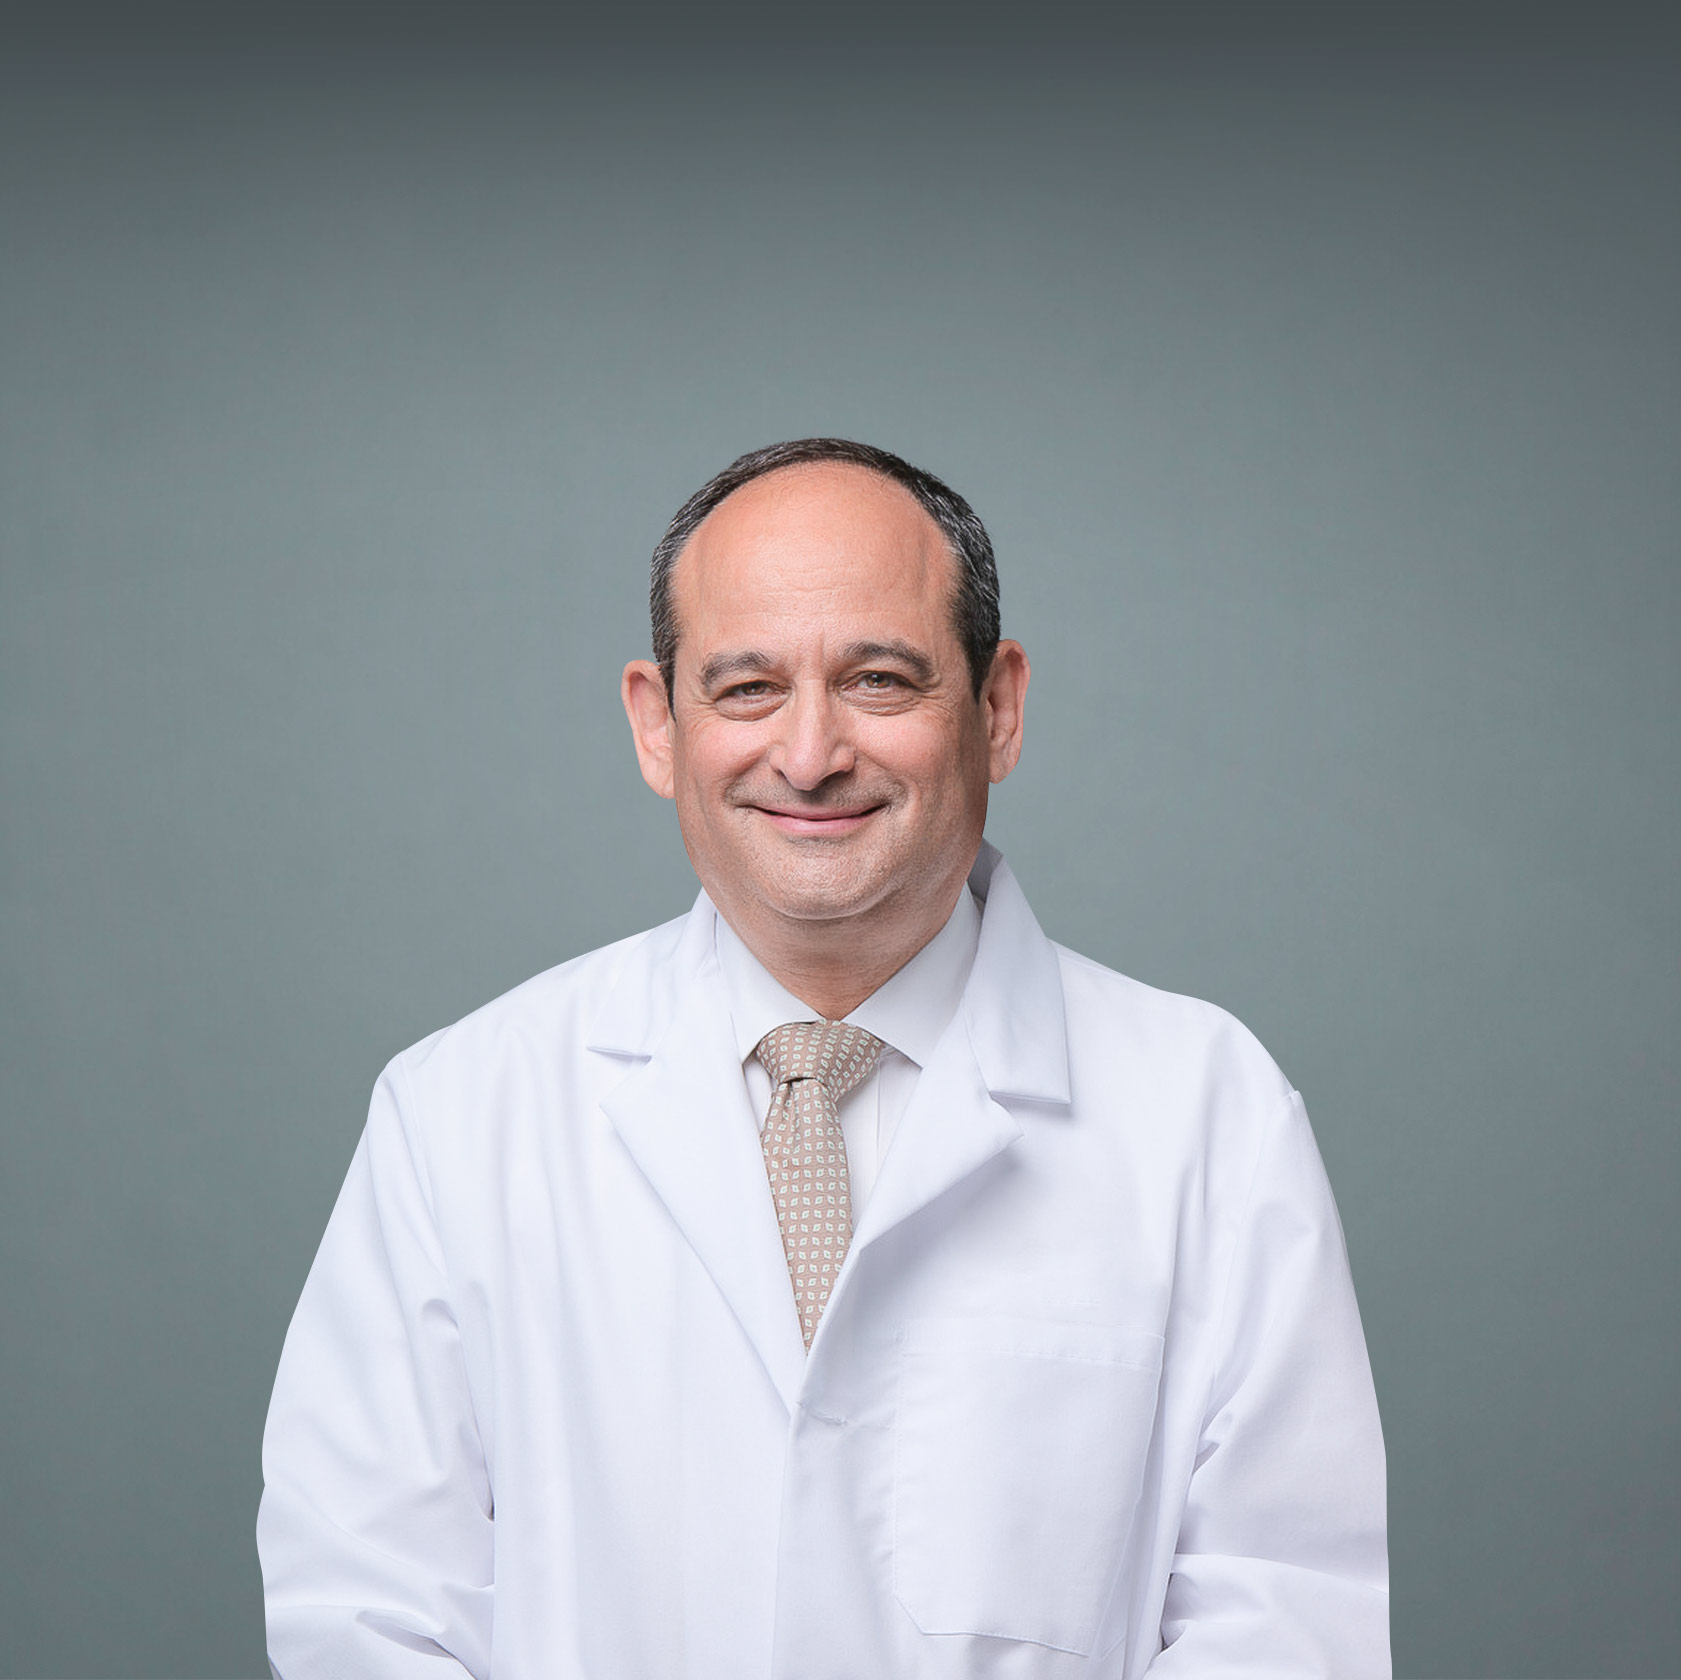 Hematologist Dr. Bruce Raphael